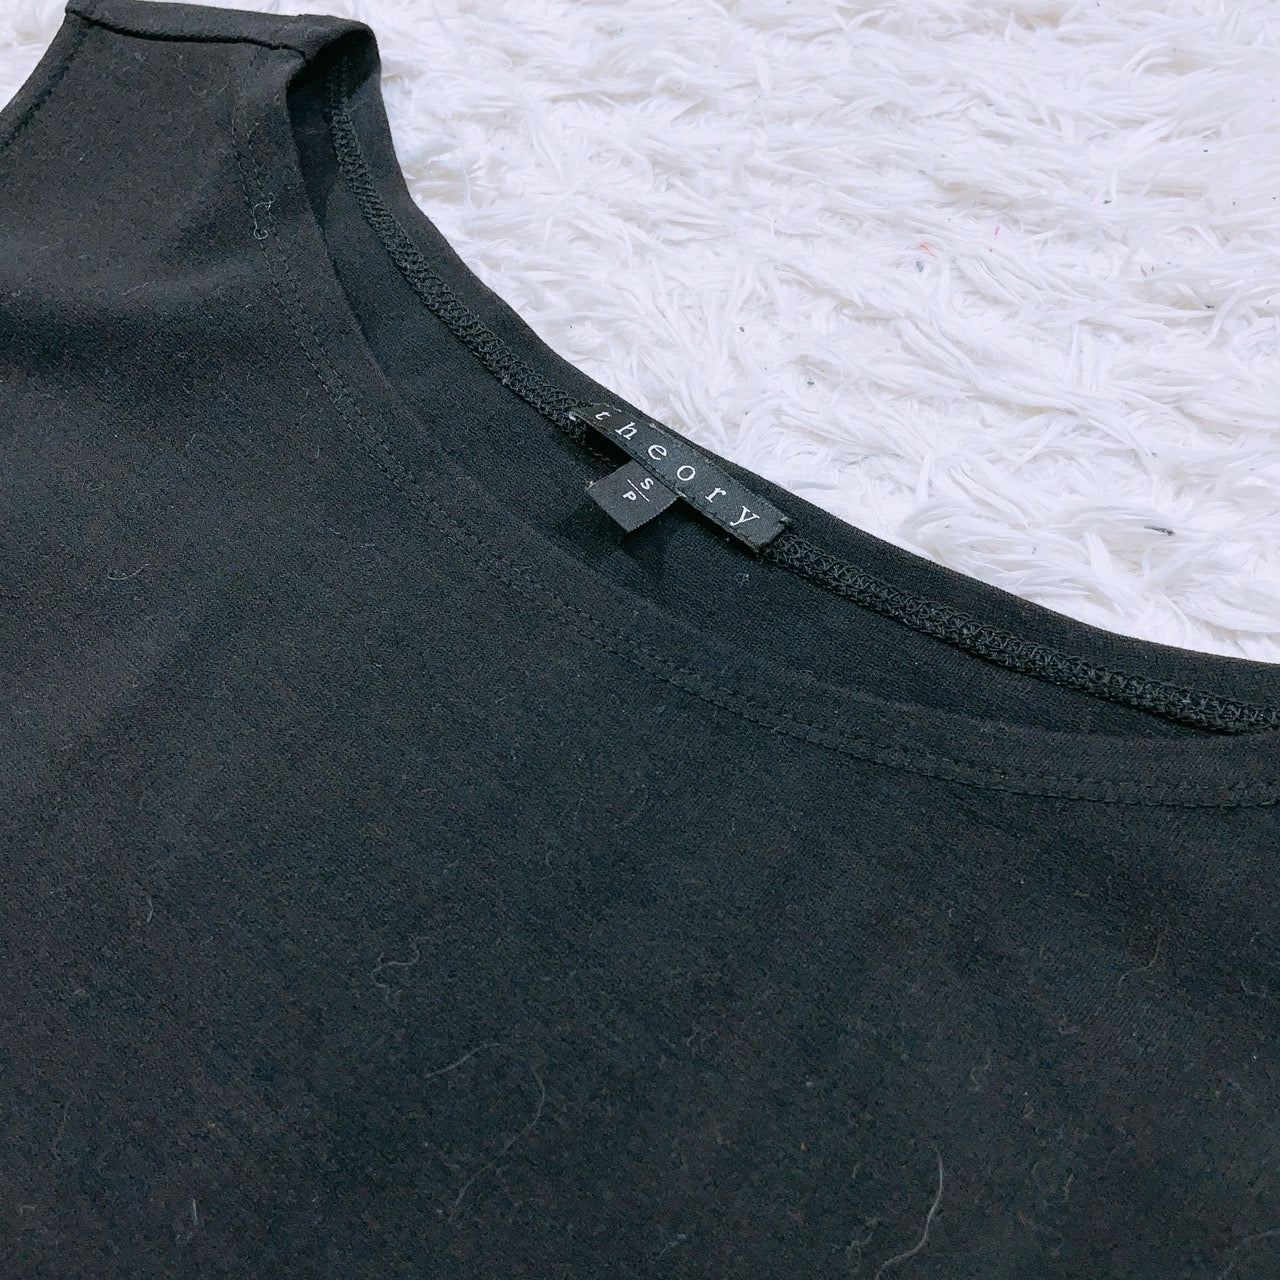 【28213】 theory セオリー タンクトップ サイズS ブラック ノースリーブシャツ 丸ネック サイドスリット シンプル 日本製 レディース